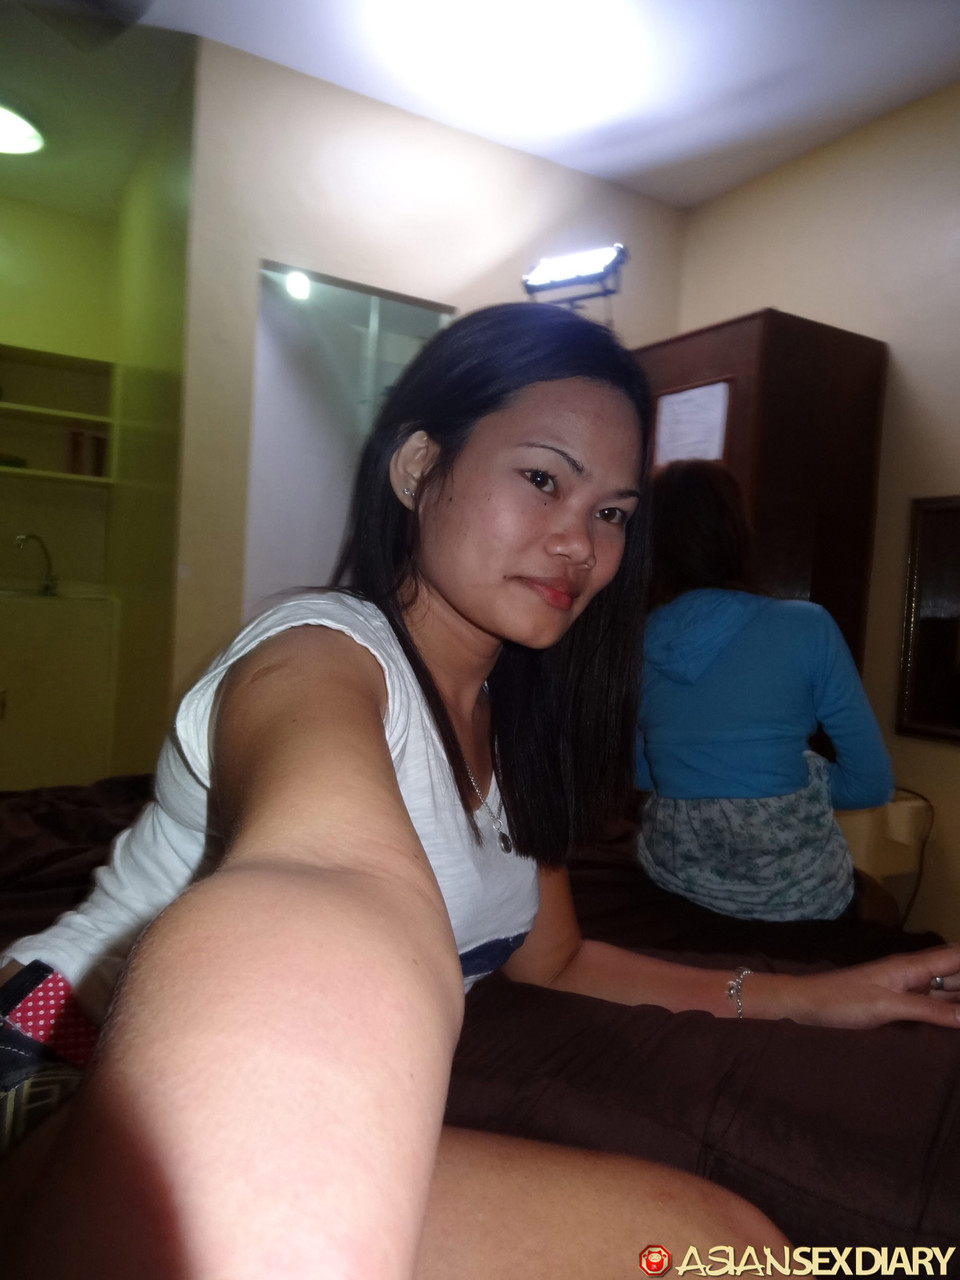 Horny Asian girls take selfies and fuck lucky tourist while enjoying free AC 色情照片 #422594962 | Asian Sex Diary Pics, Leann, Irish, Selfie, 手机色情